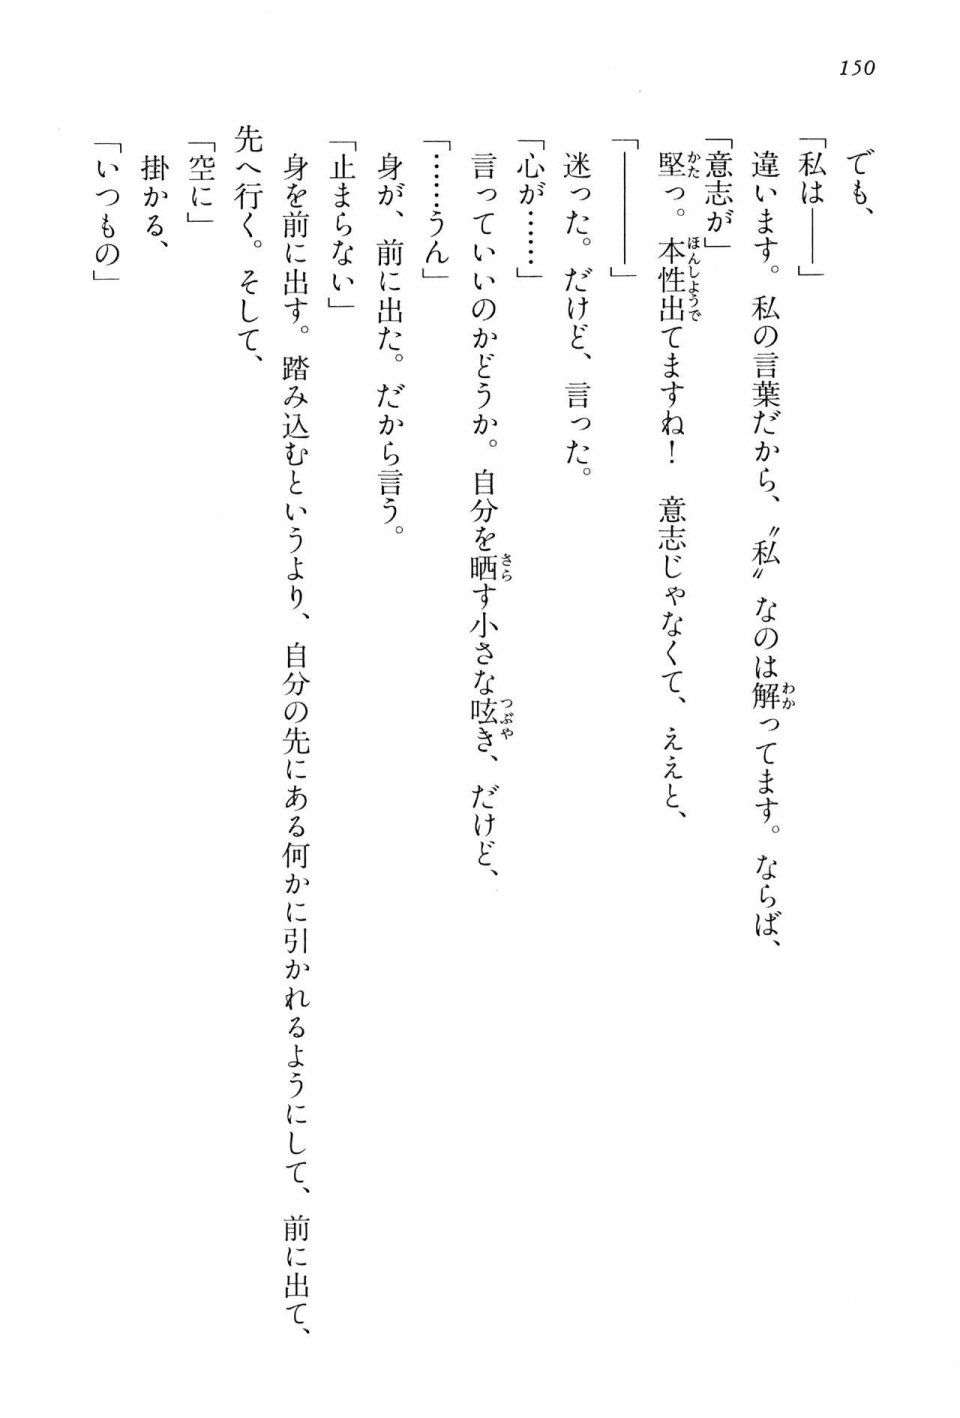 Kyoukai Senjou no Horizon BD Special Mininovel Vol 1(1A) - Photo #154